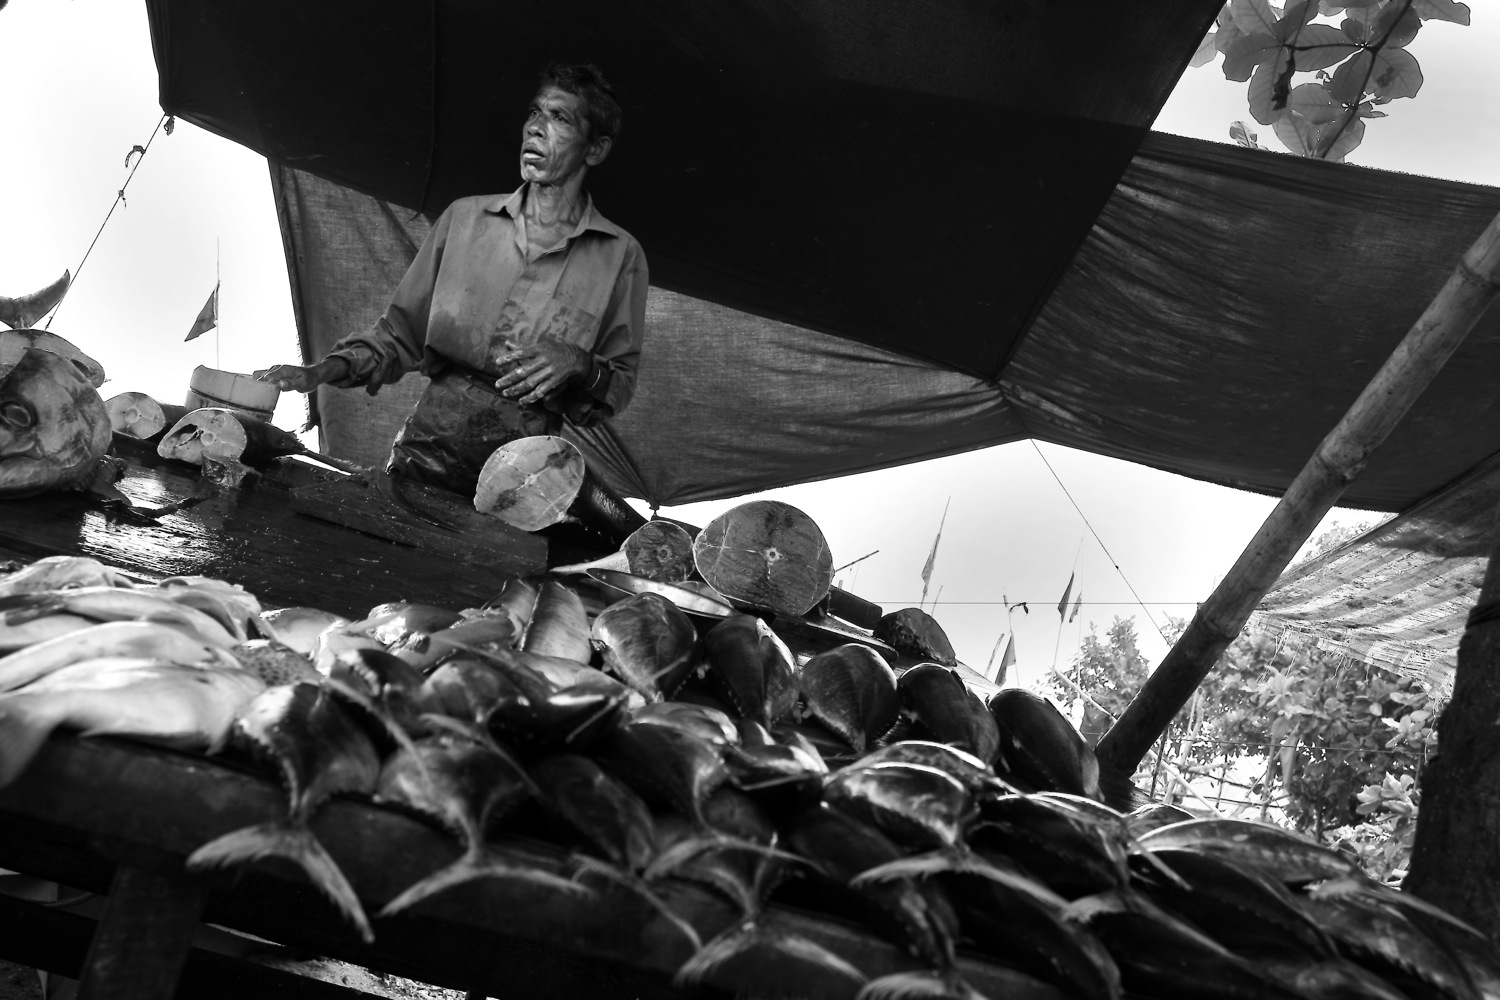 Fishmonger at vicinity of Galle Fort, Sri Lanka